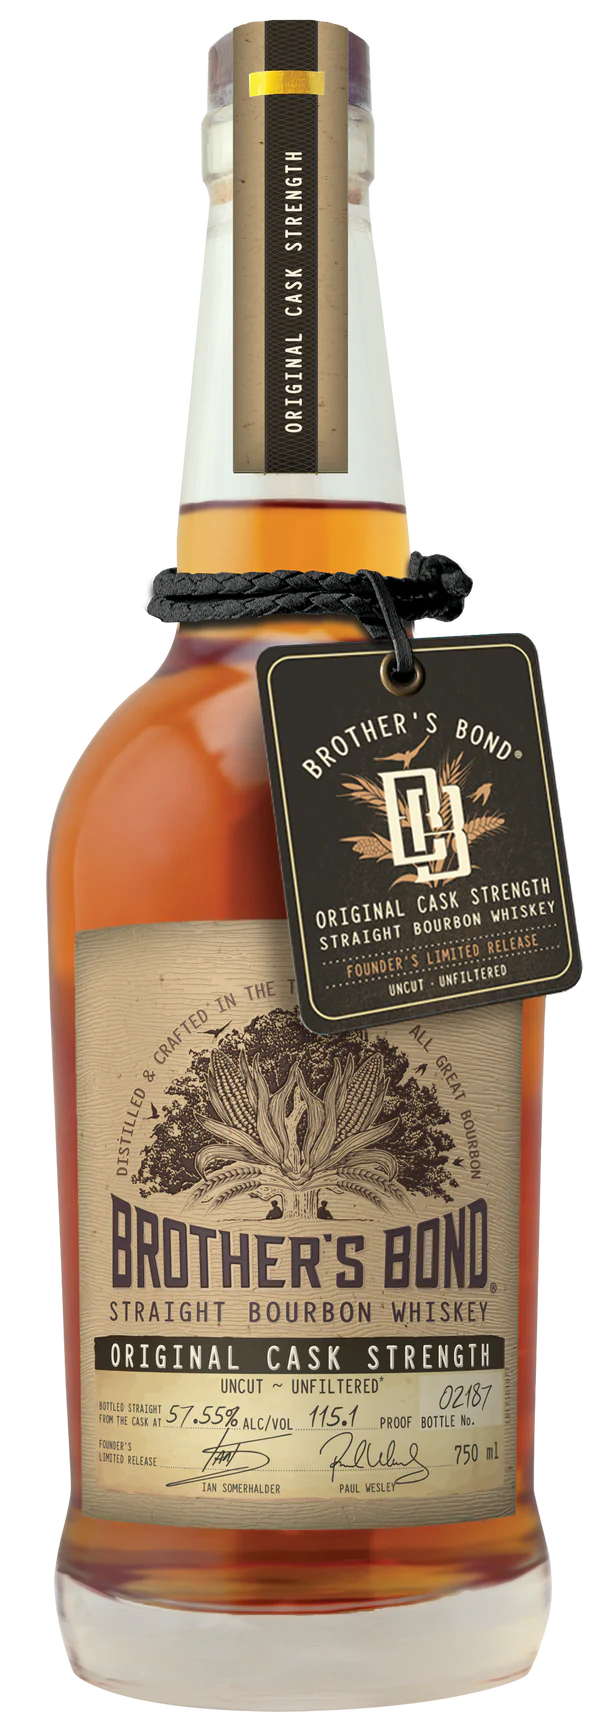 Brother's Bond Original Cask Strength Straight Bourbon Whiskey – Seelbach's